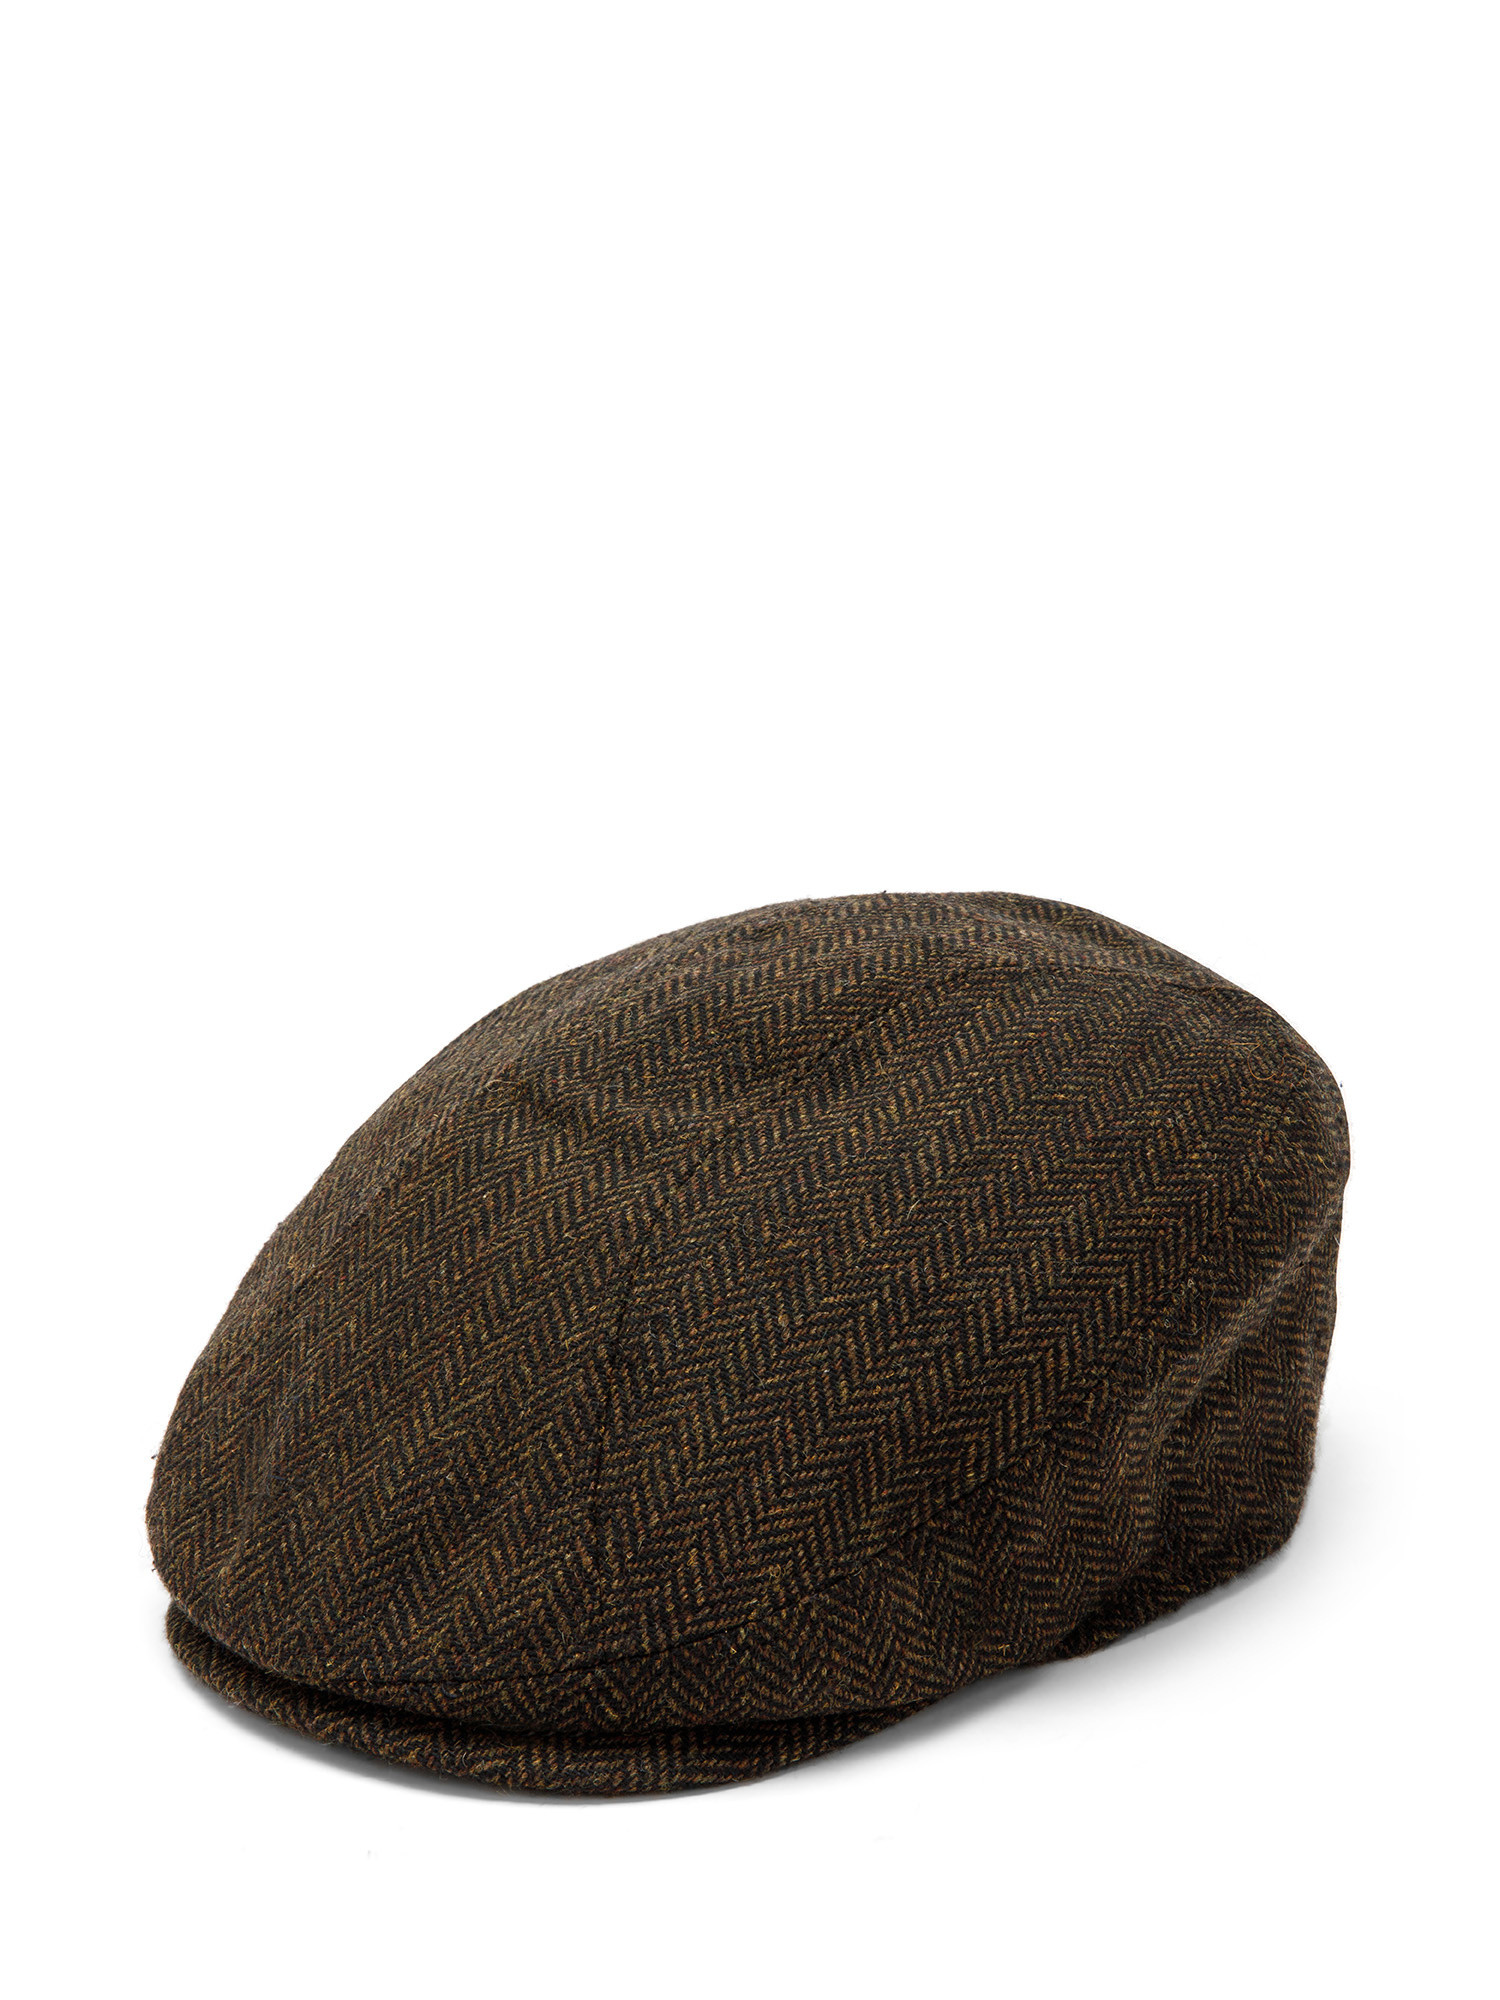 Luca D'Altieri - Flat cap in herringbone fabric, Brown, large image number 0